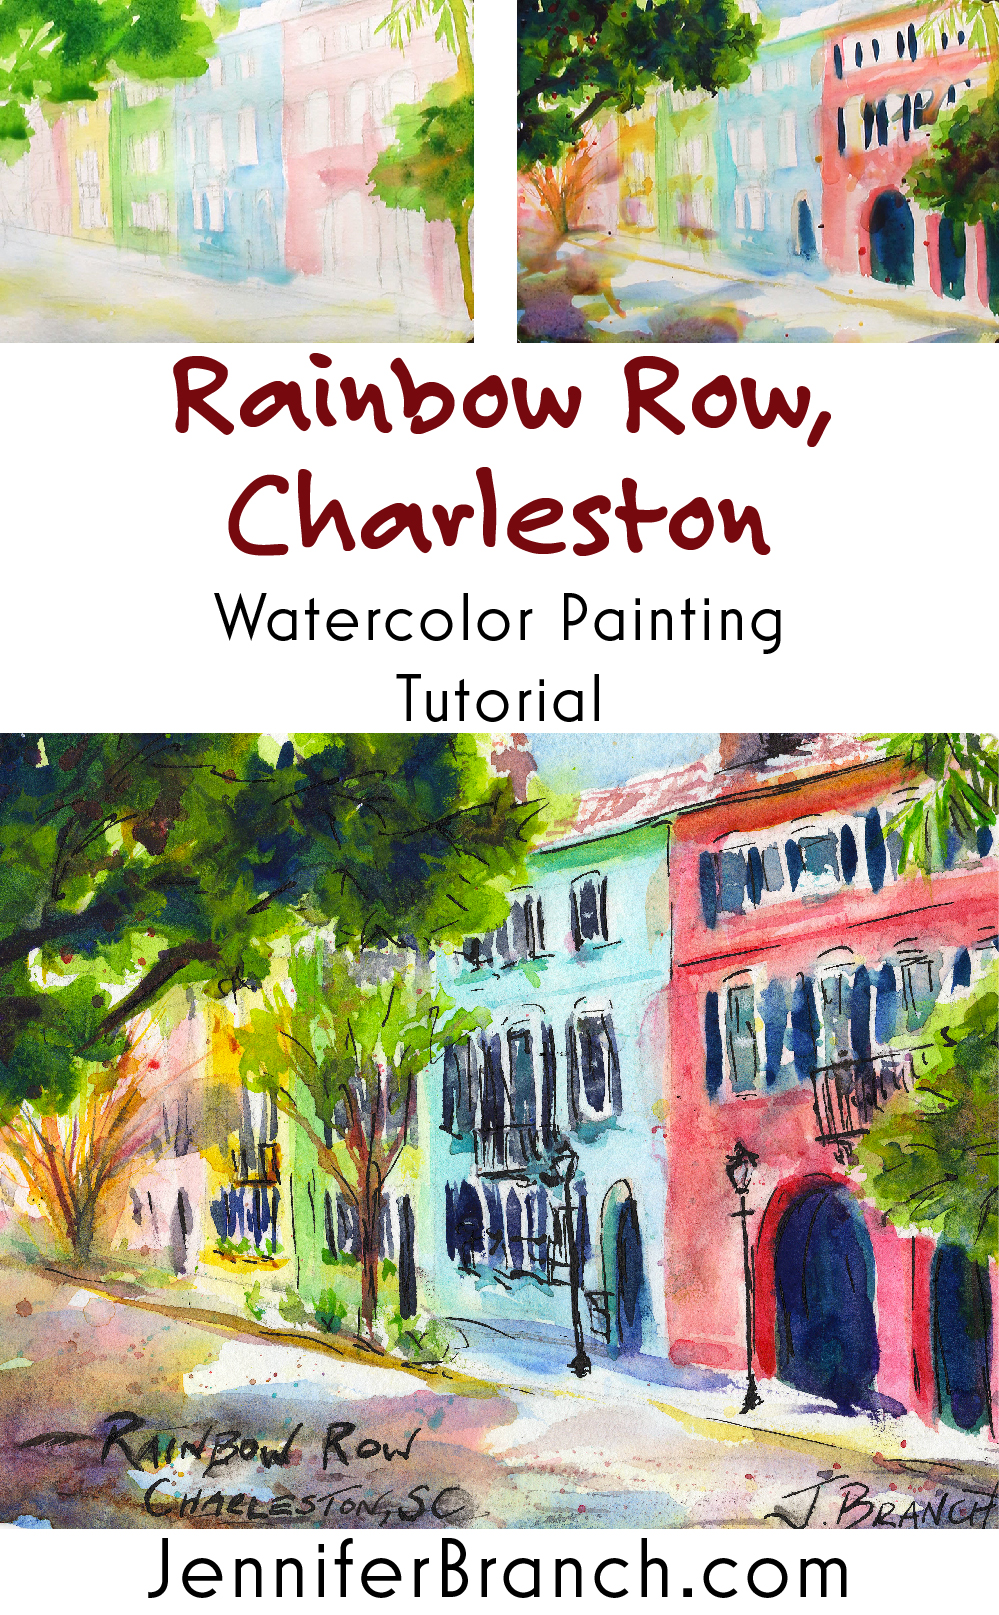 Painting Rainbow Row, Charleston watercolor painting tutorial by Jennifer Branch